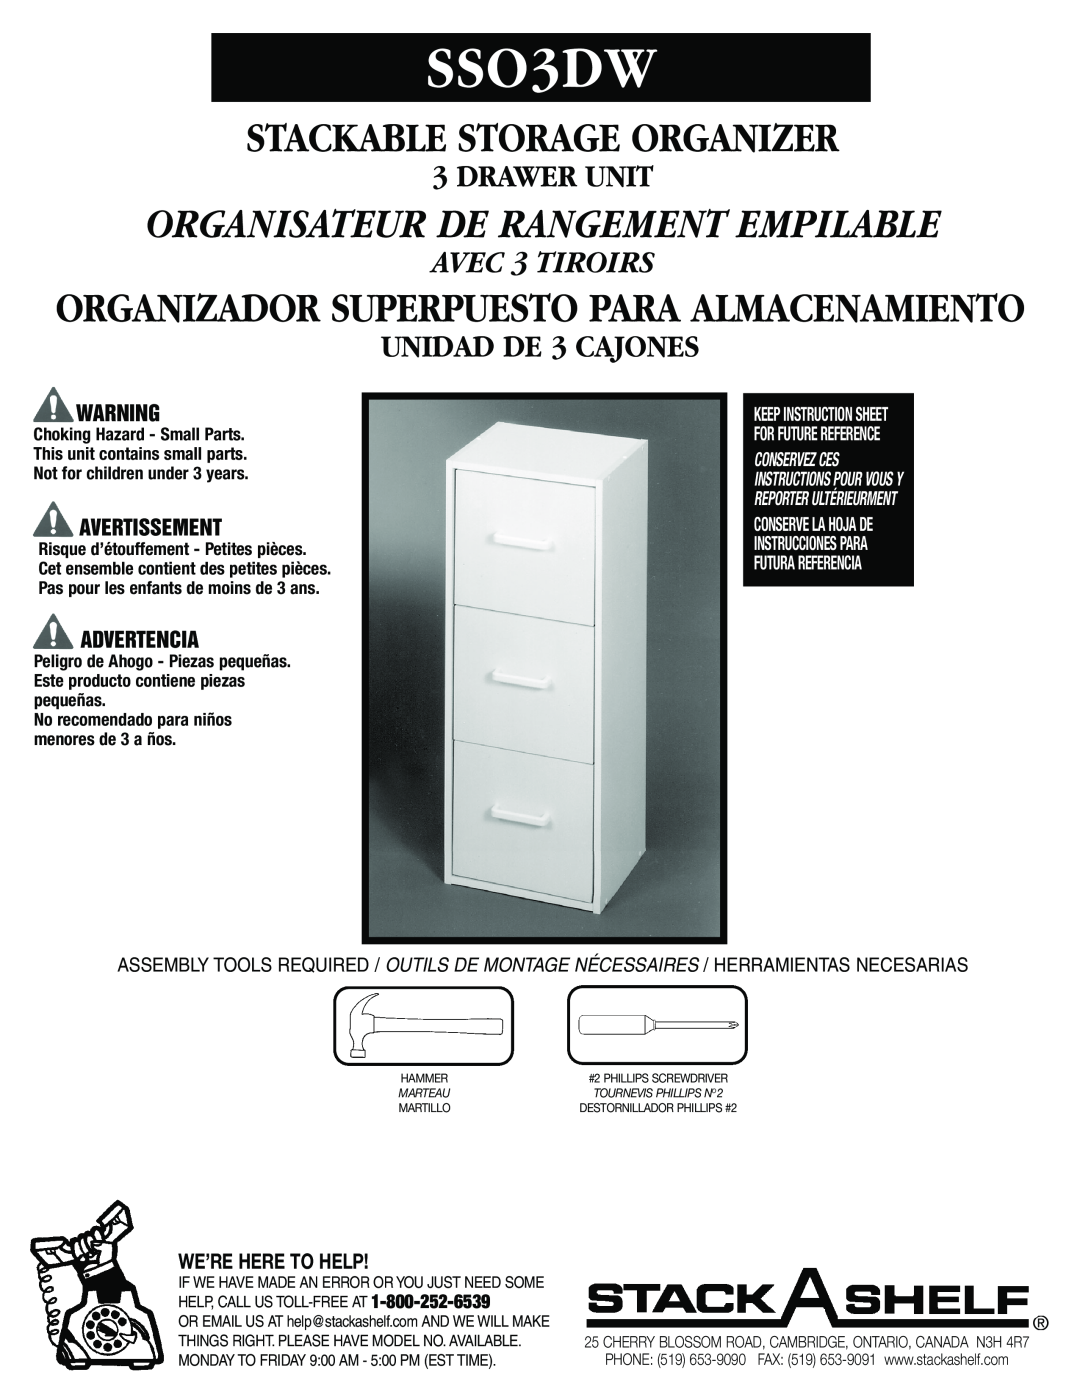 Closet Maid SSO3DW instruction sheet Avertissement, Advertencia, We’Re Here To Help, Stackable Storage Organizer 